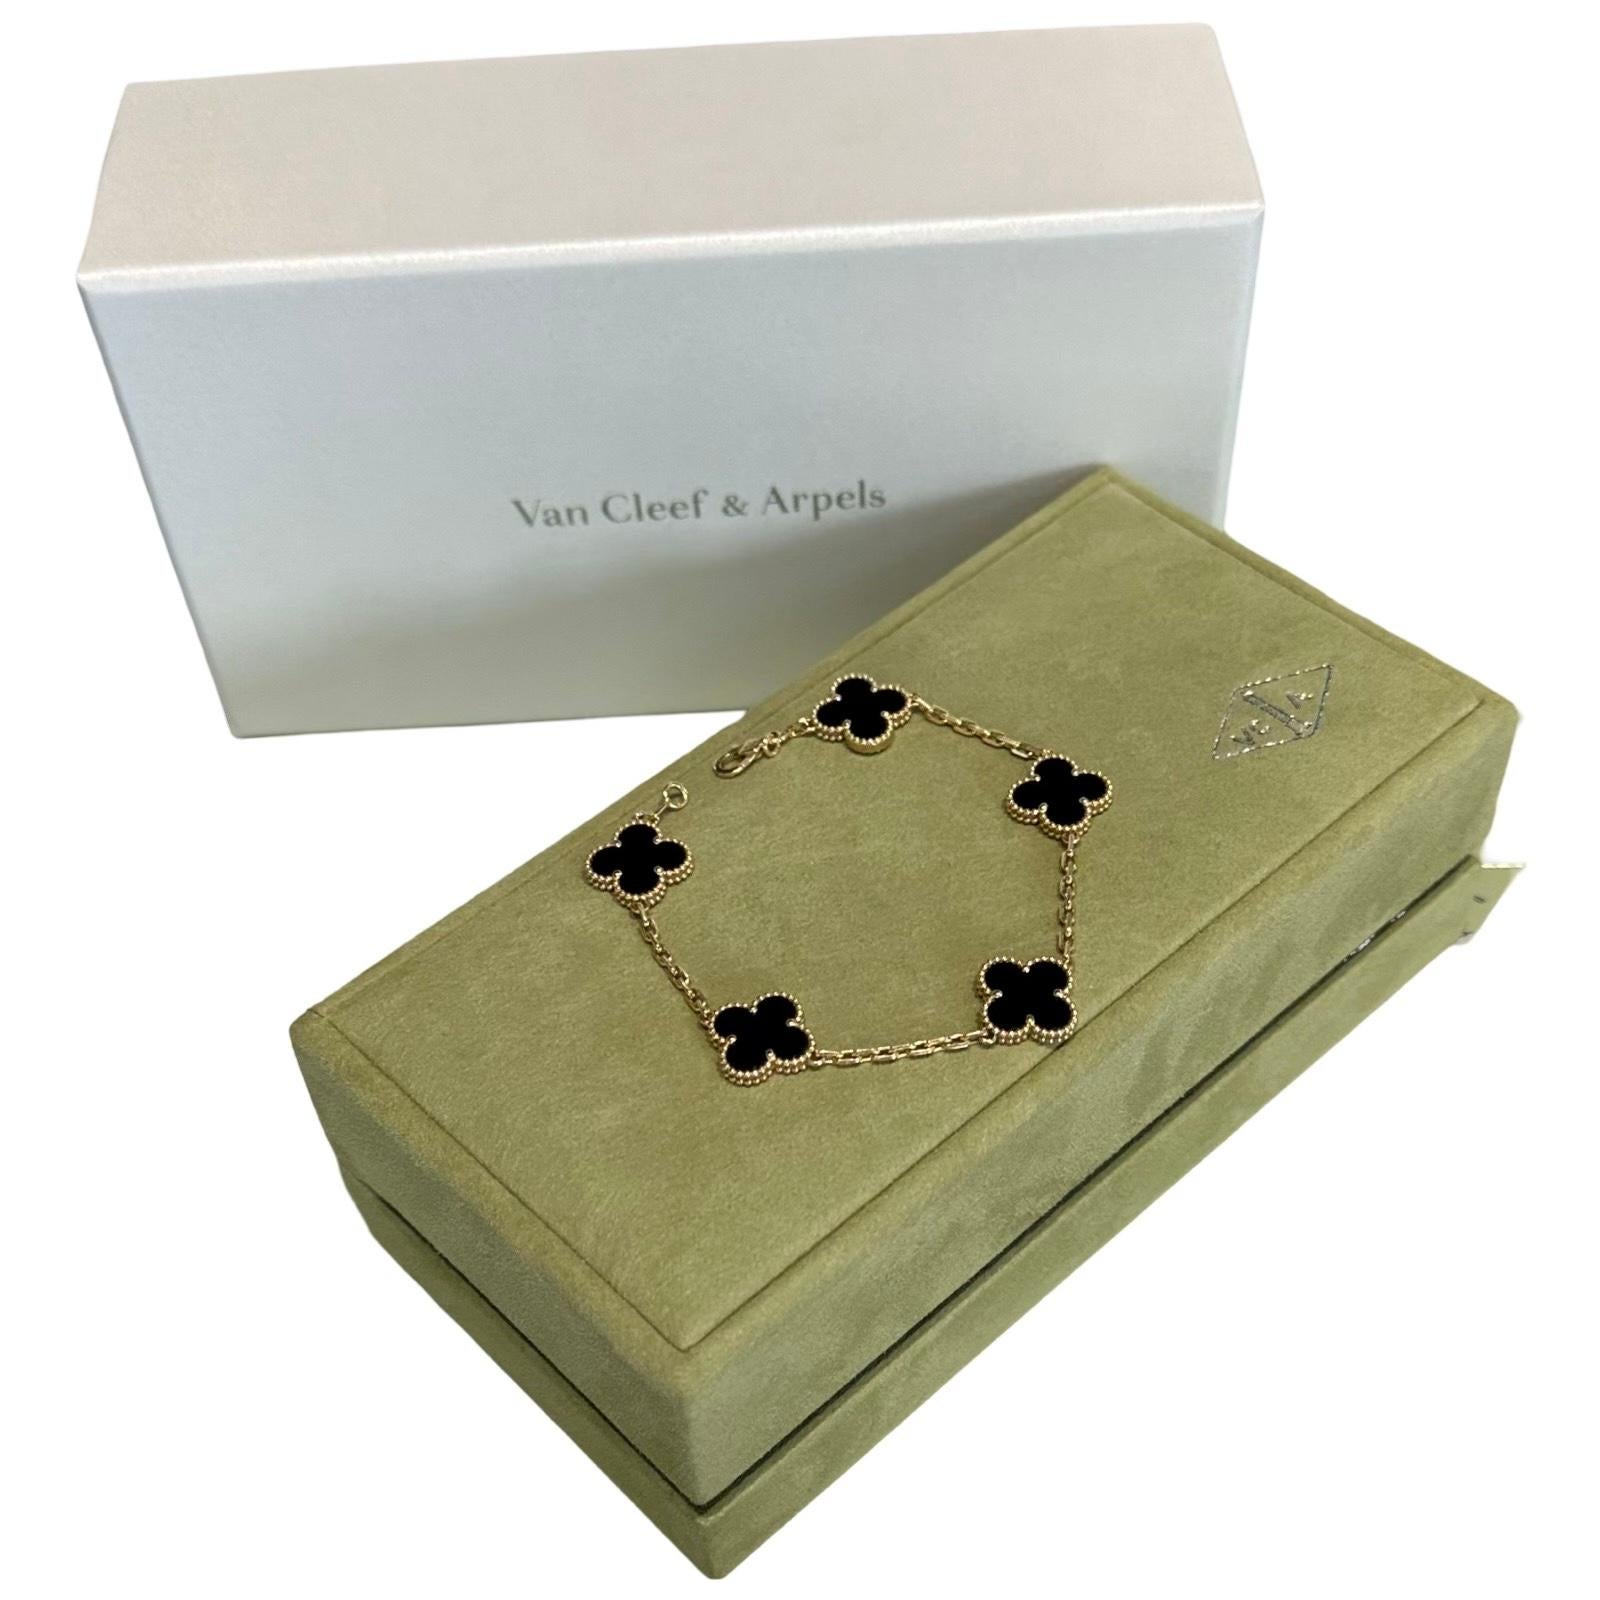 Brand: Van Cleef & Arpels

Model: Vintage Alhambra Bracelet

Stone: Onyx

Metal: 18k Yellow Gold

Includes: VCA Box
                VCA Authenticity Certificate